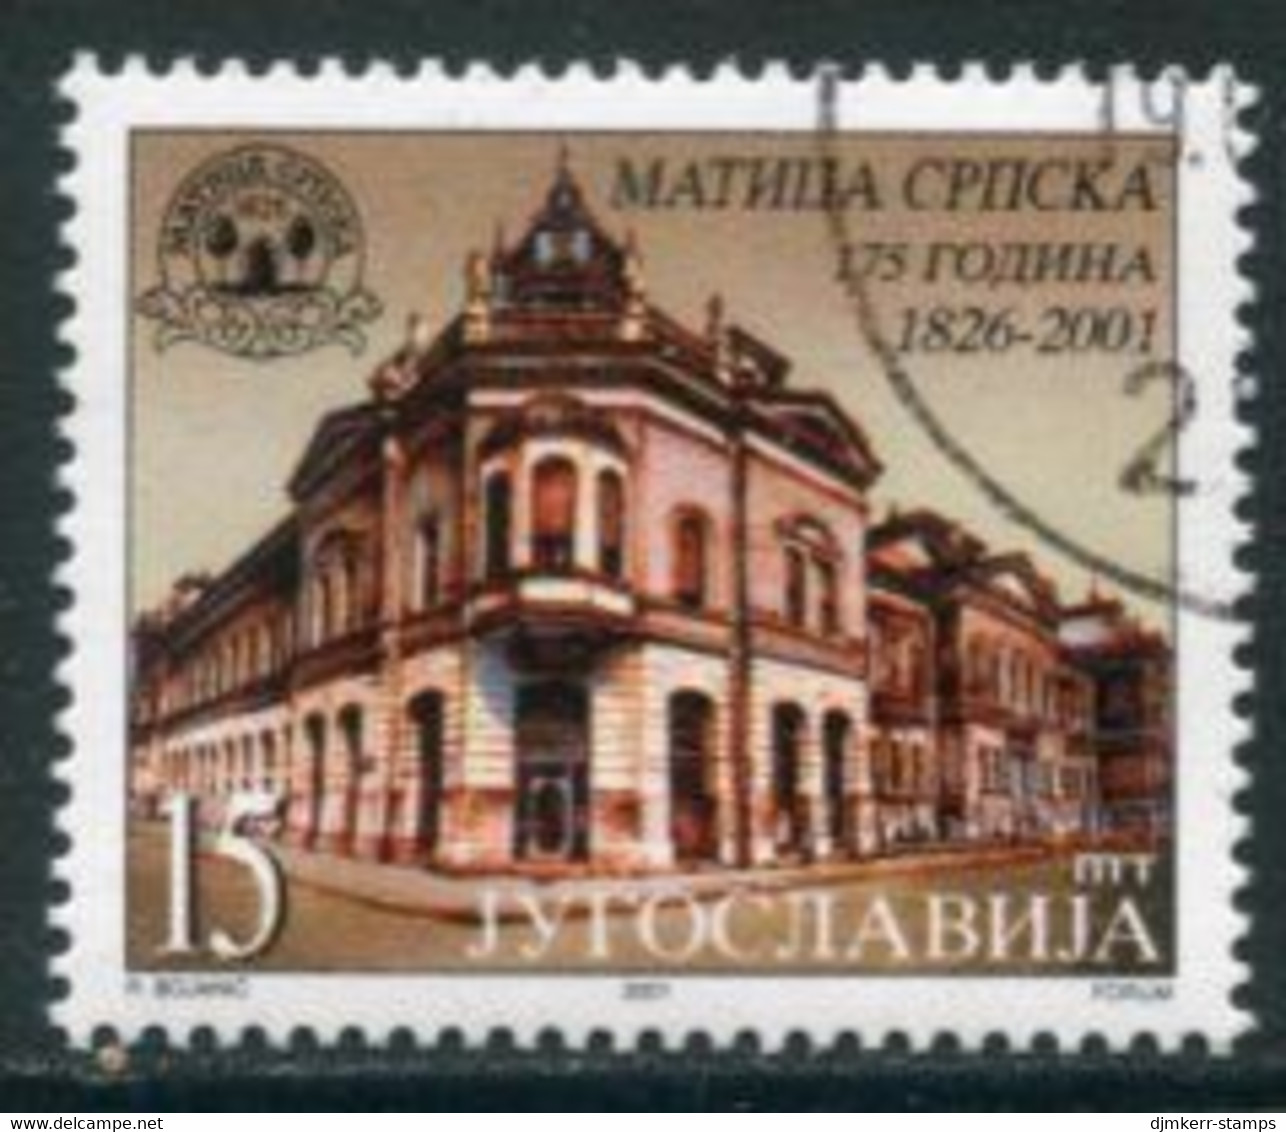 YUGOSLAVIA 2001 Matica Srpska Literary Association Used.  Michel 3012 - Usati